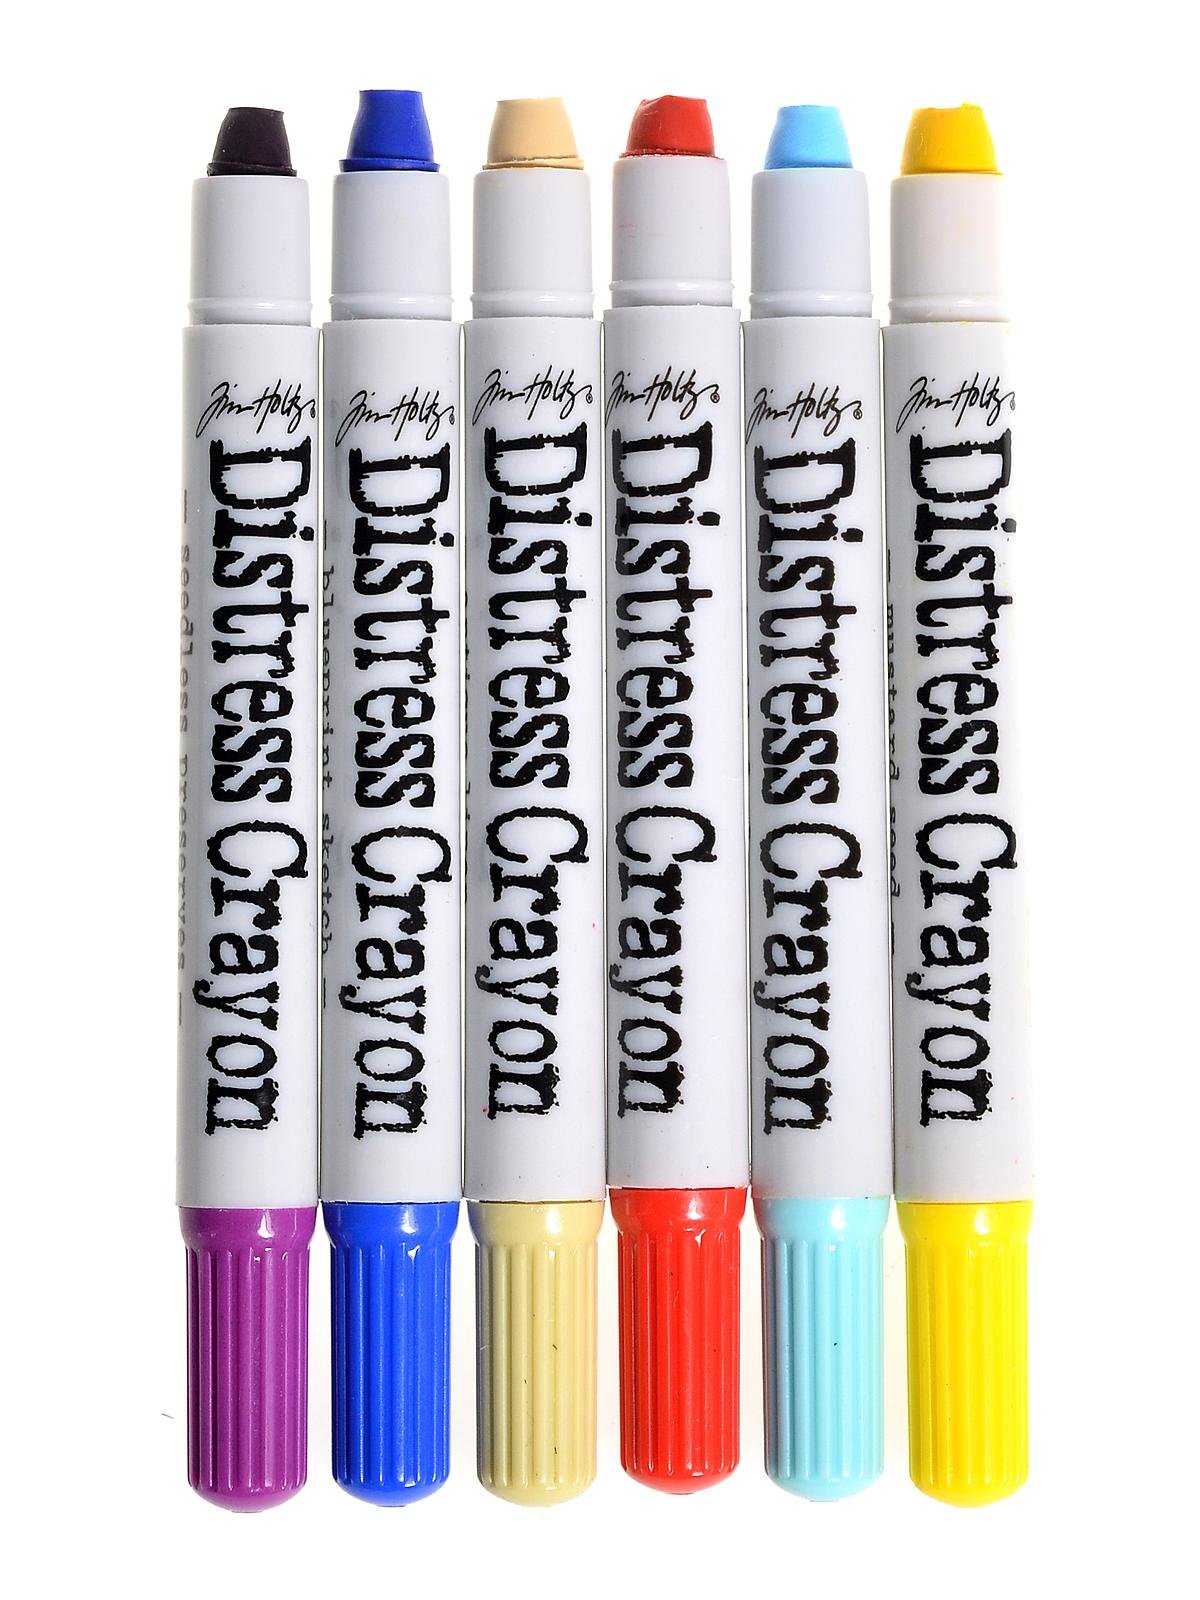 Tim Holtz Distress Crayons